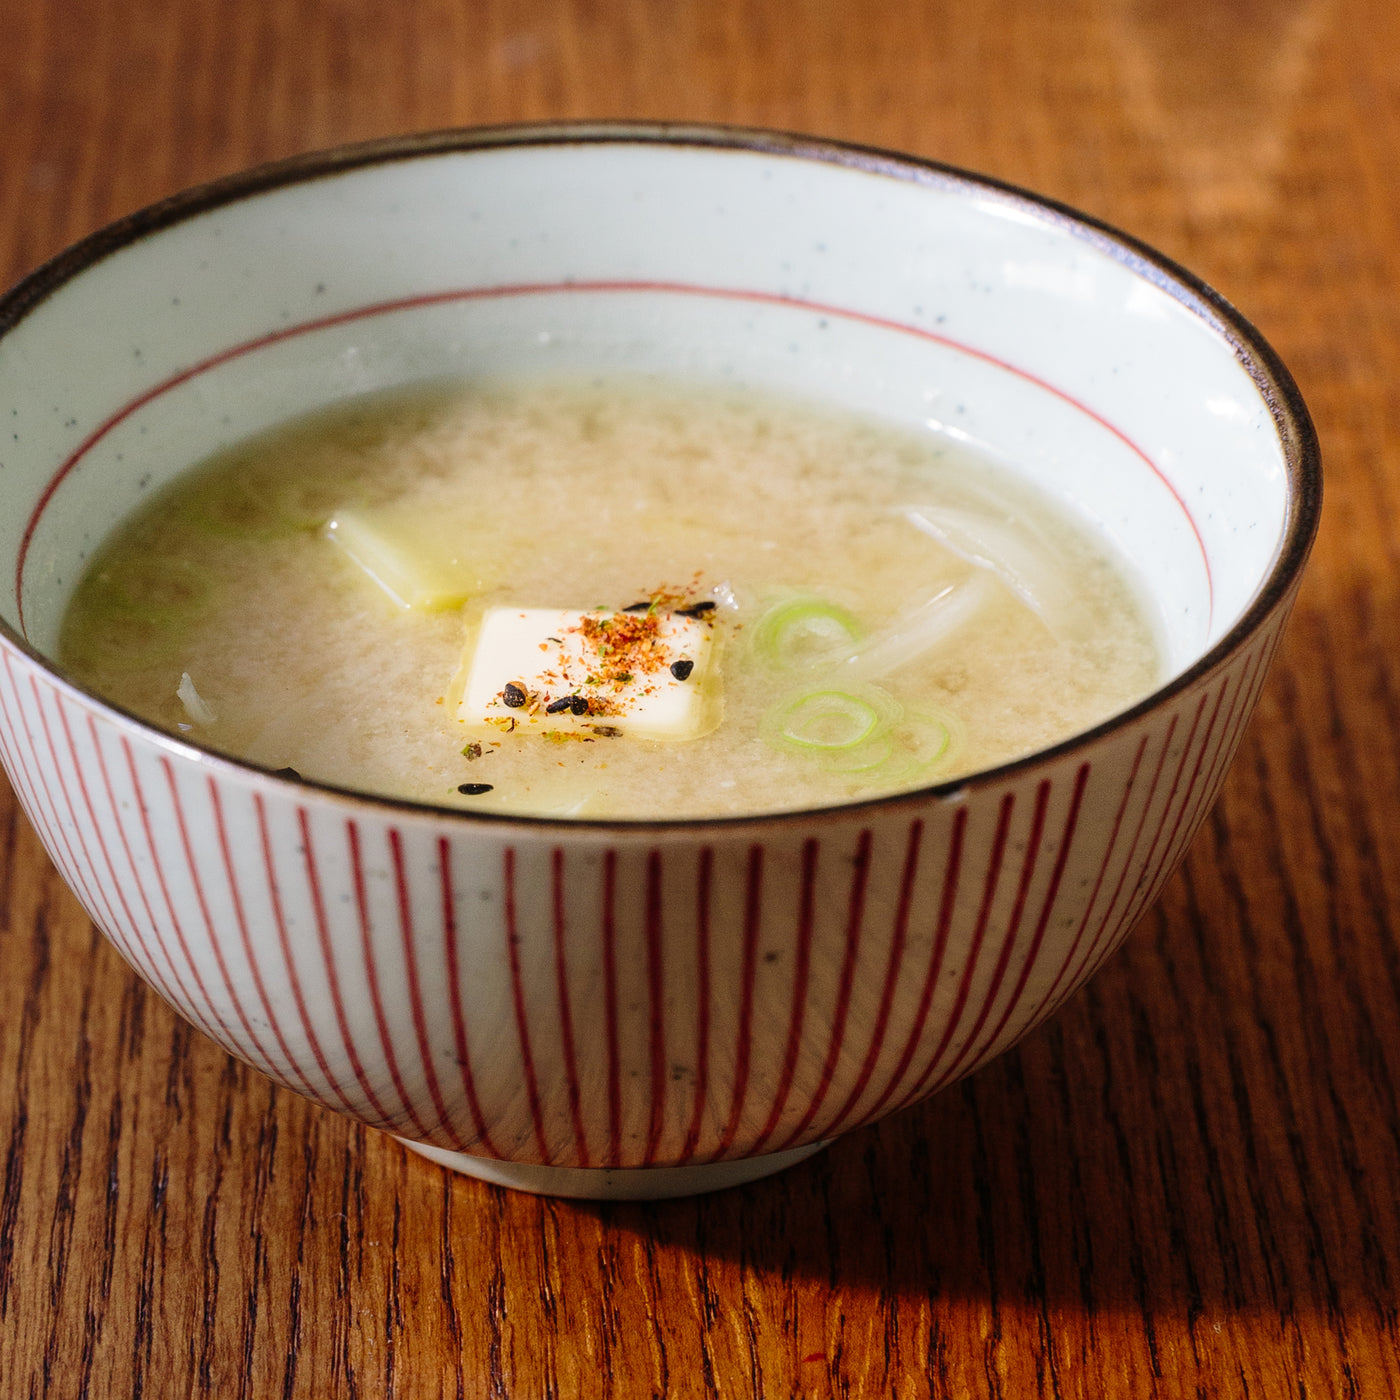 Miso Soup Kit - Shiro (White) Miso - SEASONAL